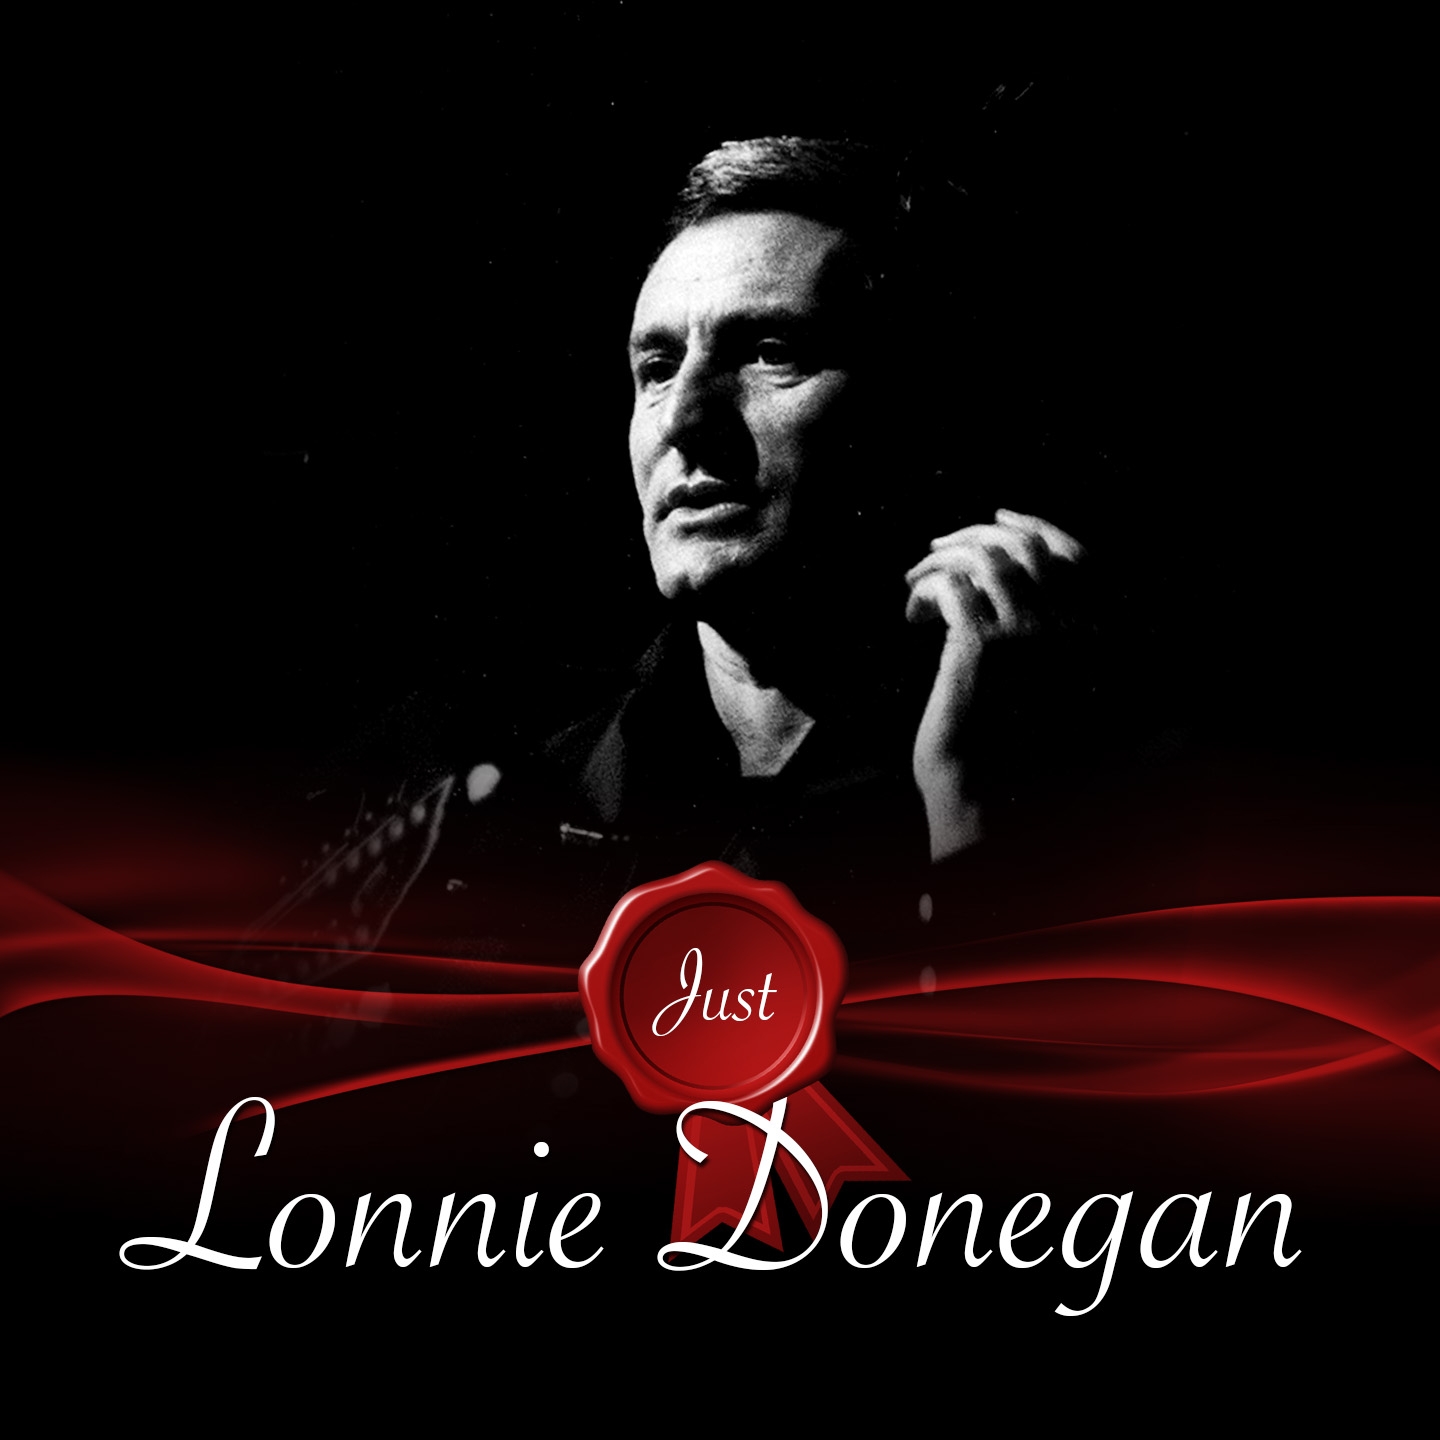 Just - Lonnie Donegan